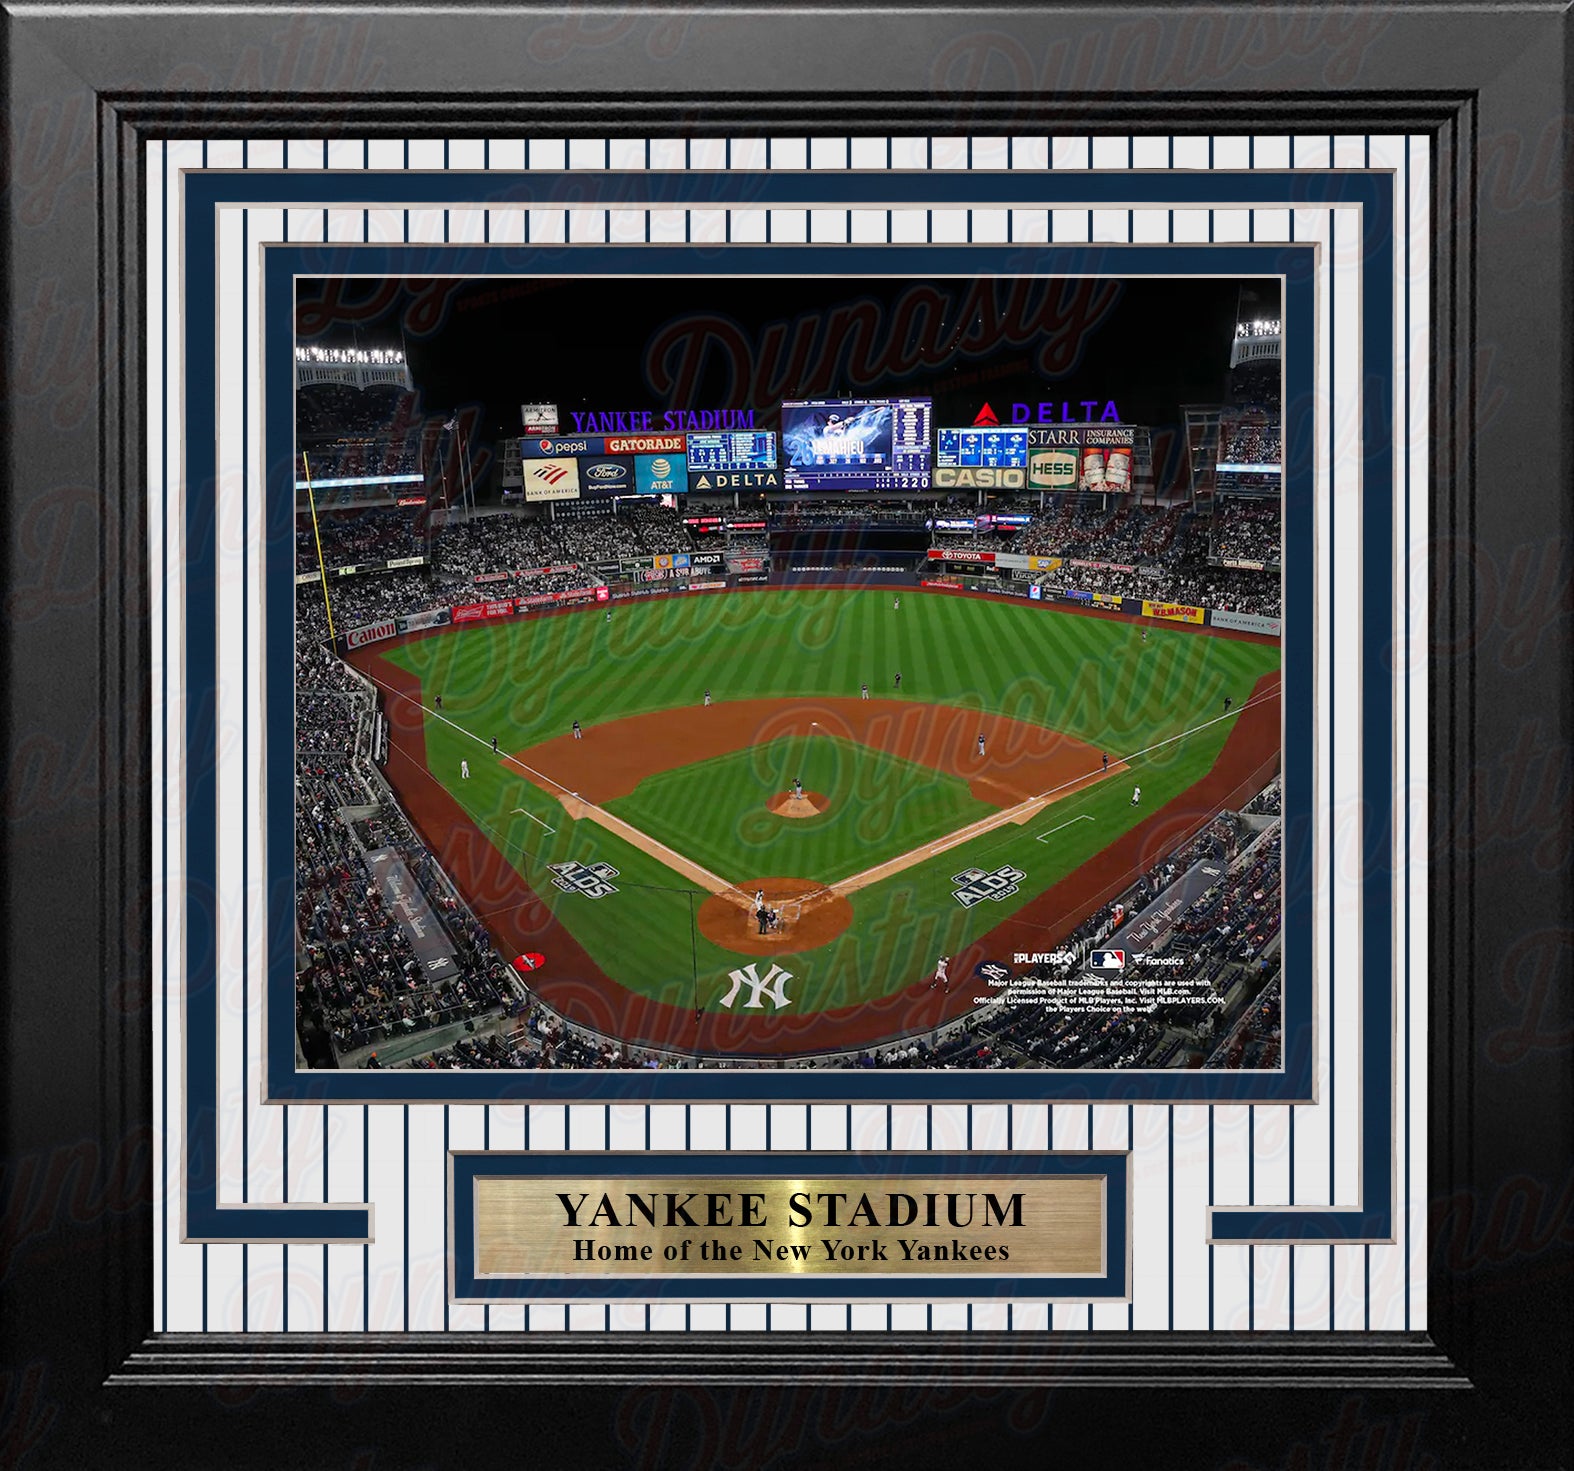 New York Yankees Stadium 8" x 10" Framed Baseball Photo - Dynasty Sports & Framing 